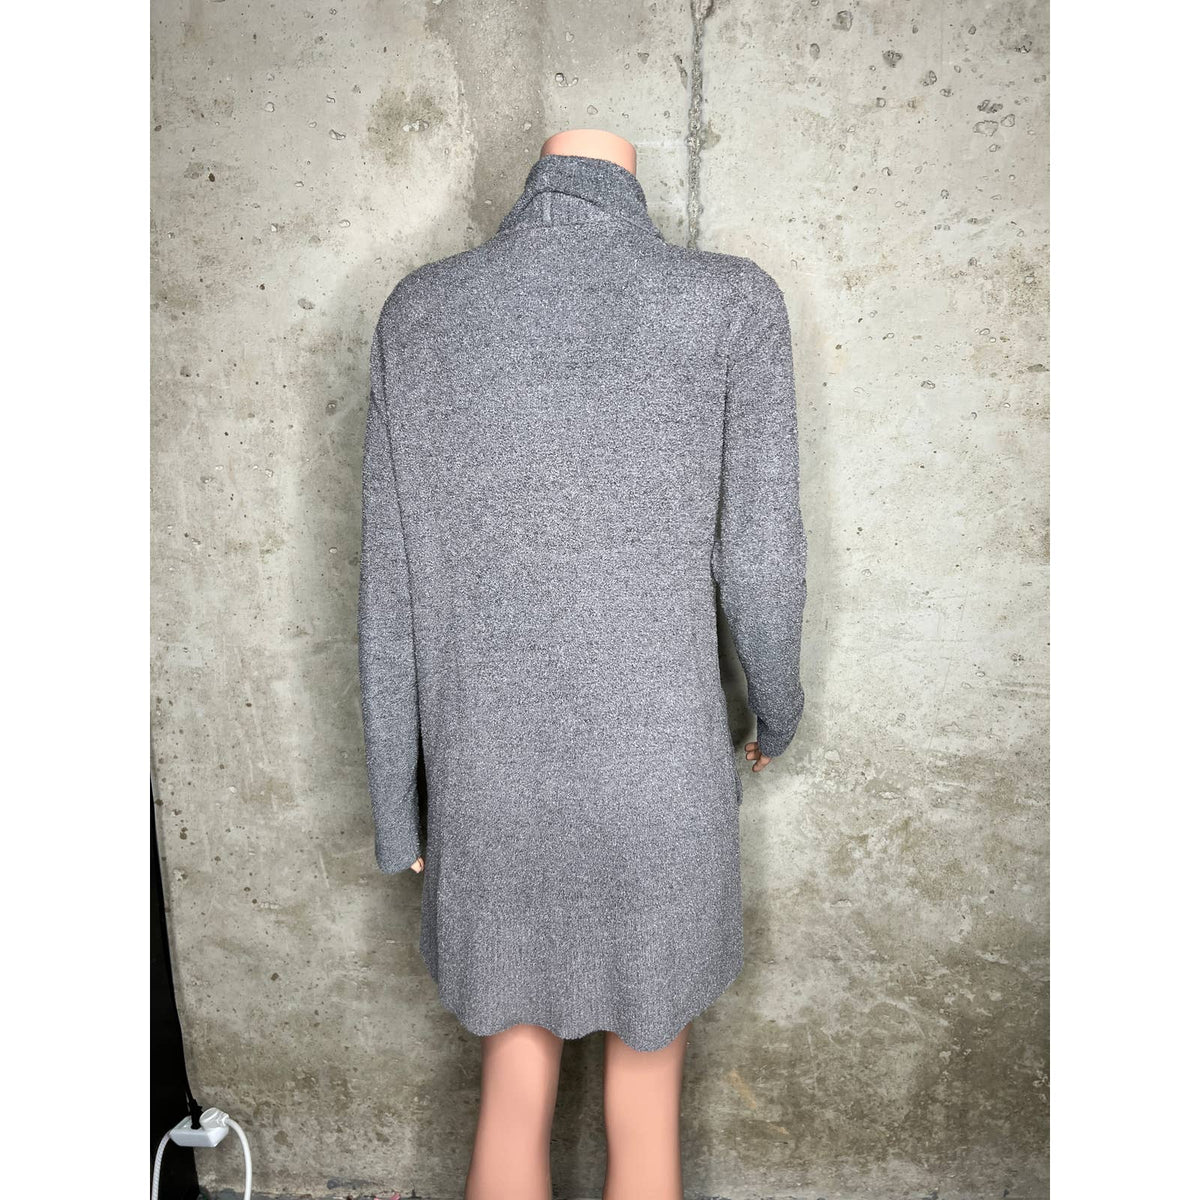 Barefoot Grey Open Front Cardigan Sweater Sz. Medium